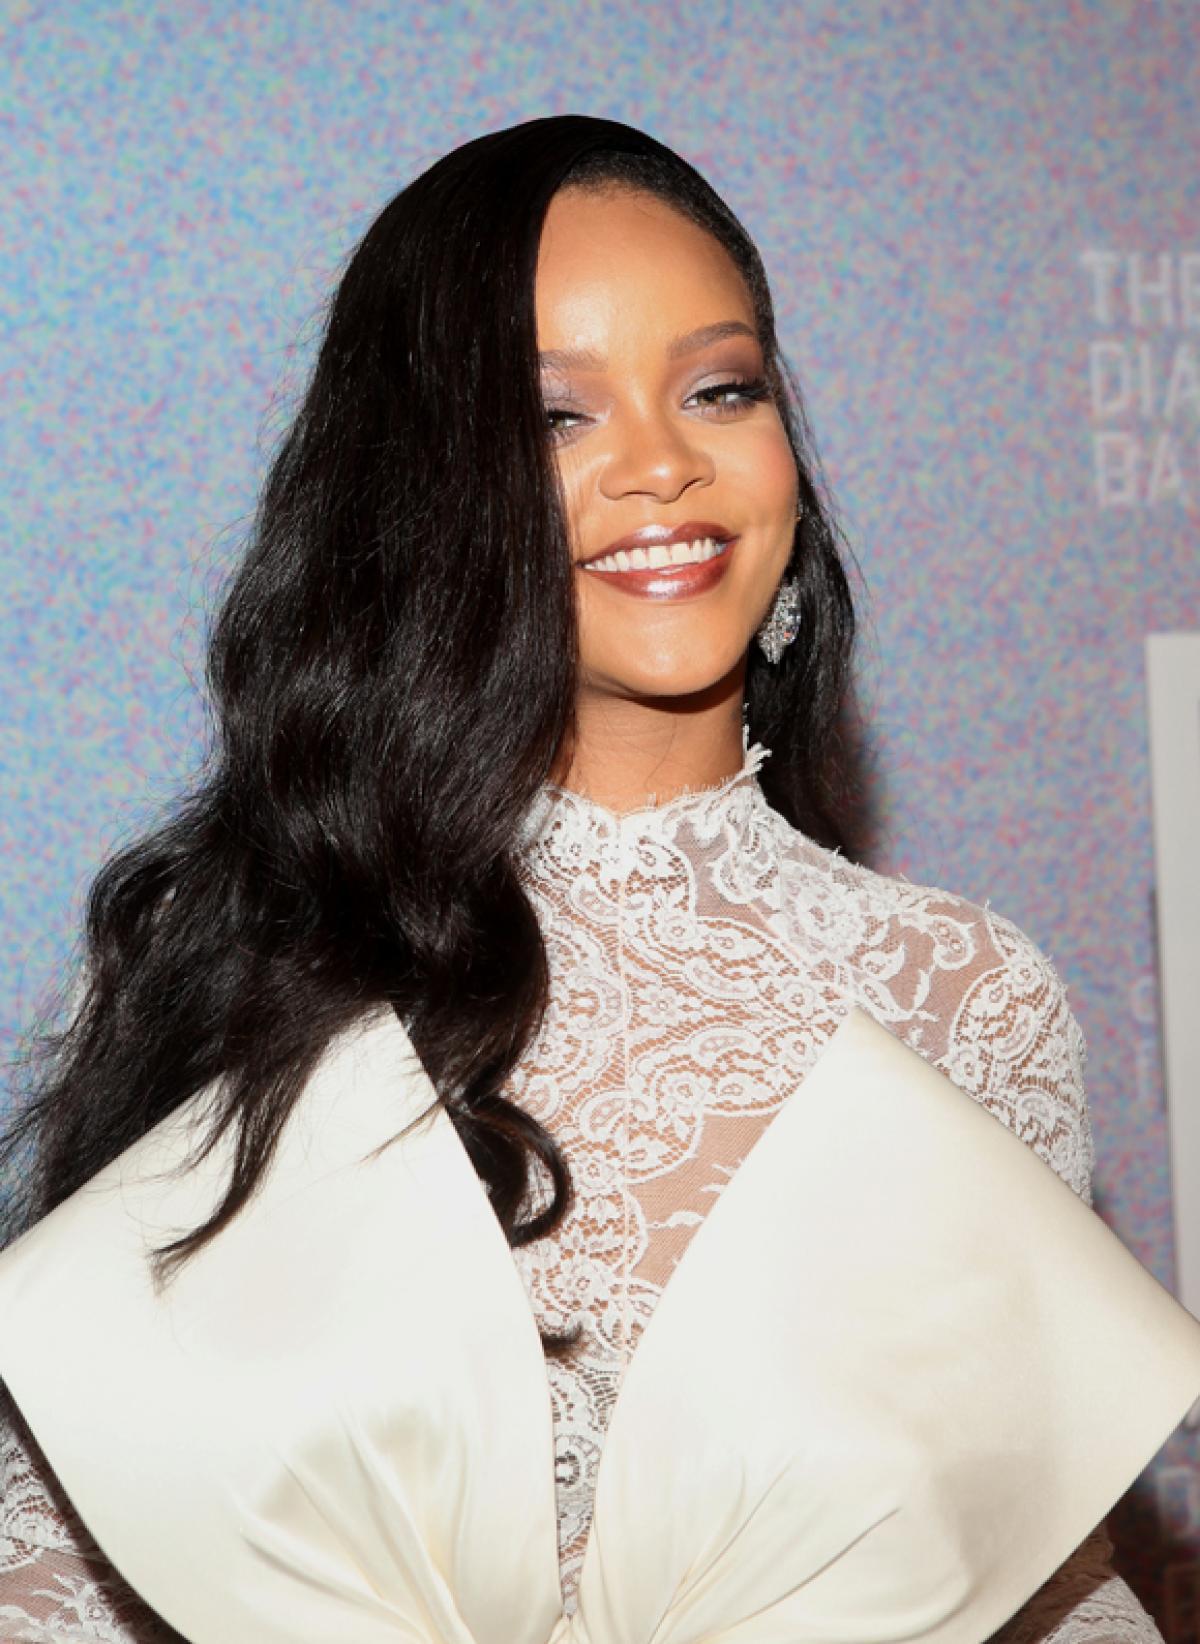 Rihanna's Fenty Beauty pulls 'Geisha Chic' highlighter amid backlash